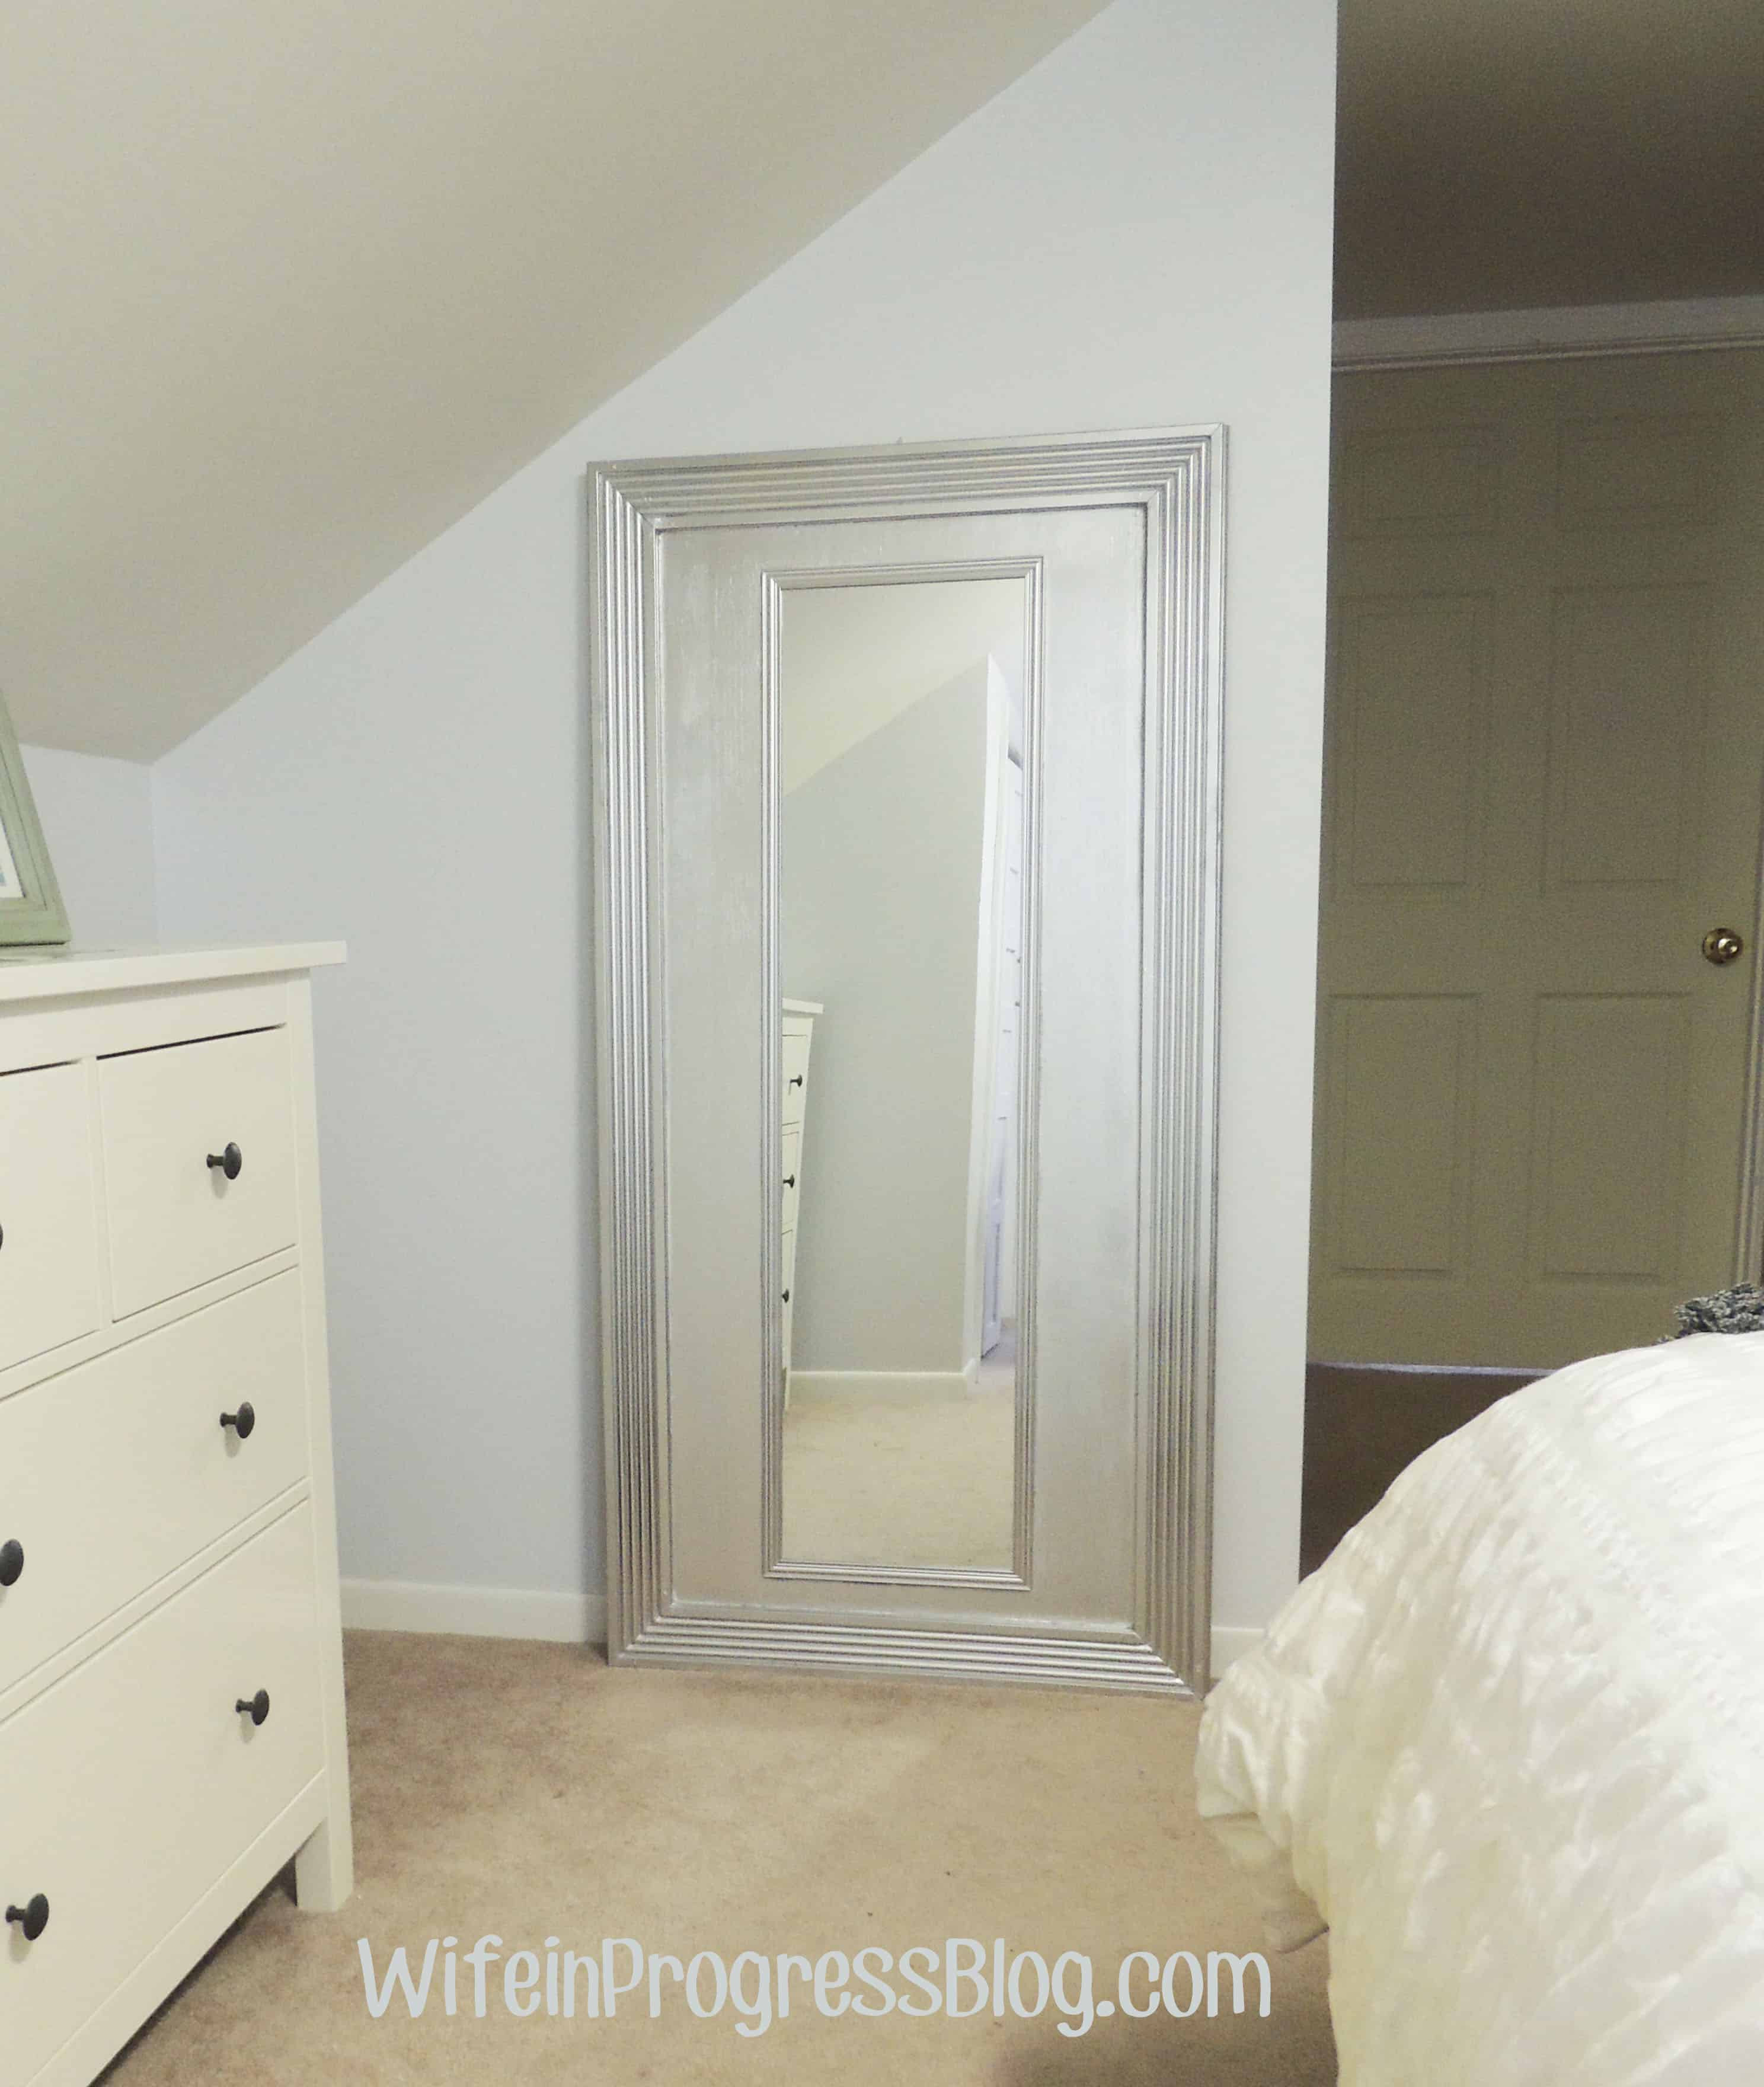 Best ideas about DIY Floor Mirror
. Save or Pin $25 DIY Floor Mirror Wife in Progress Now.